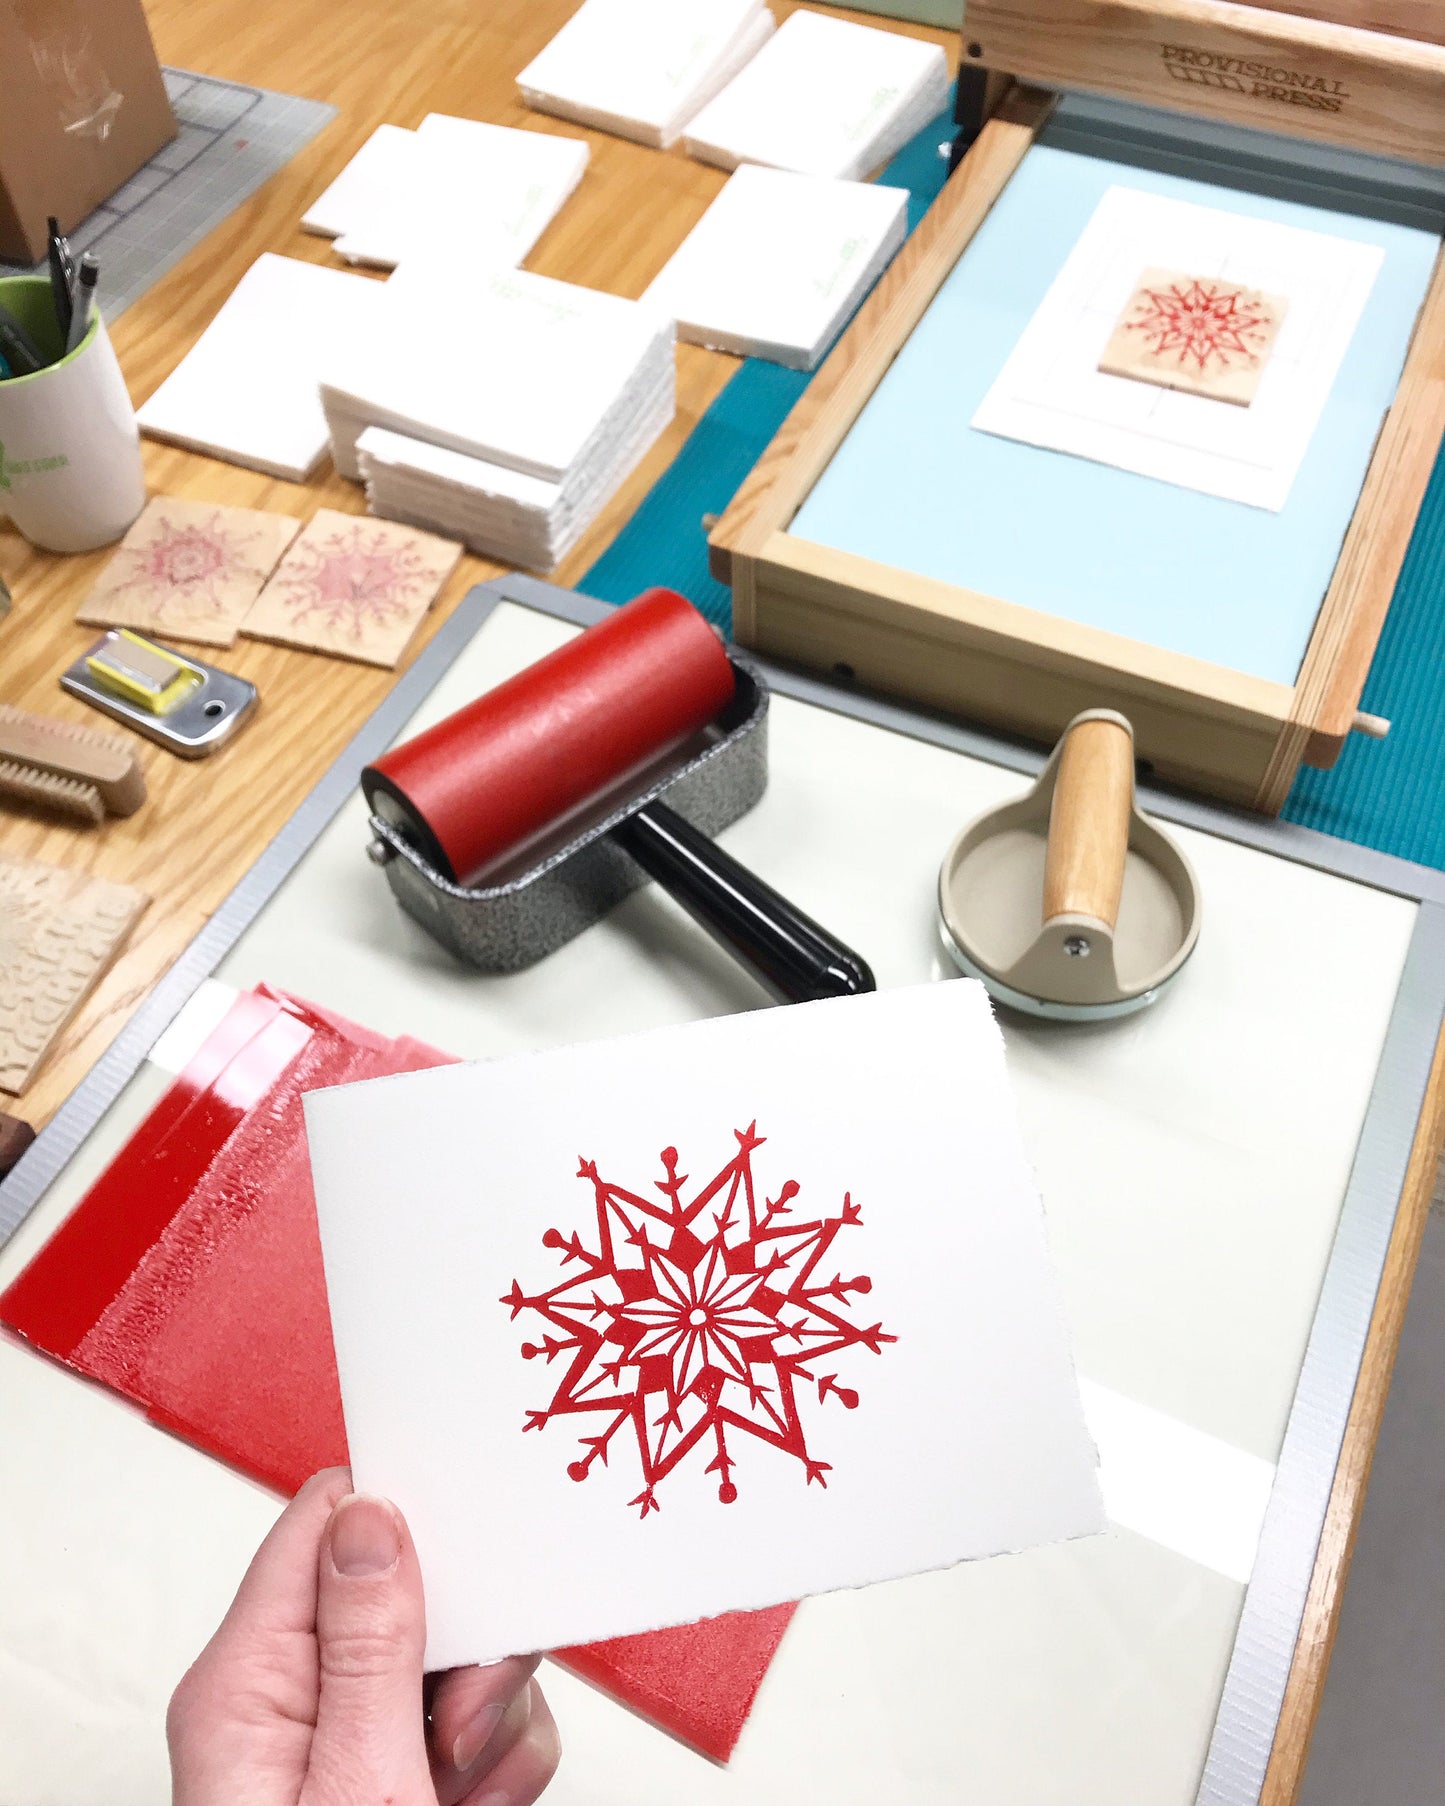 Snowflake red single card - woodblock printed